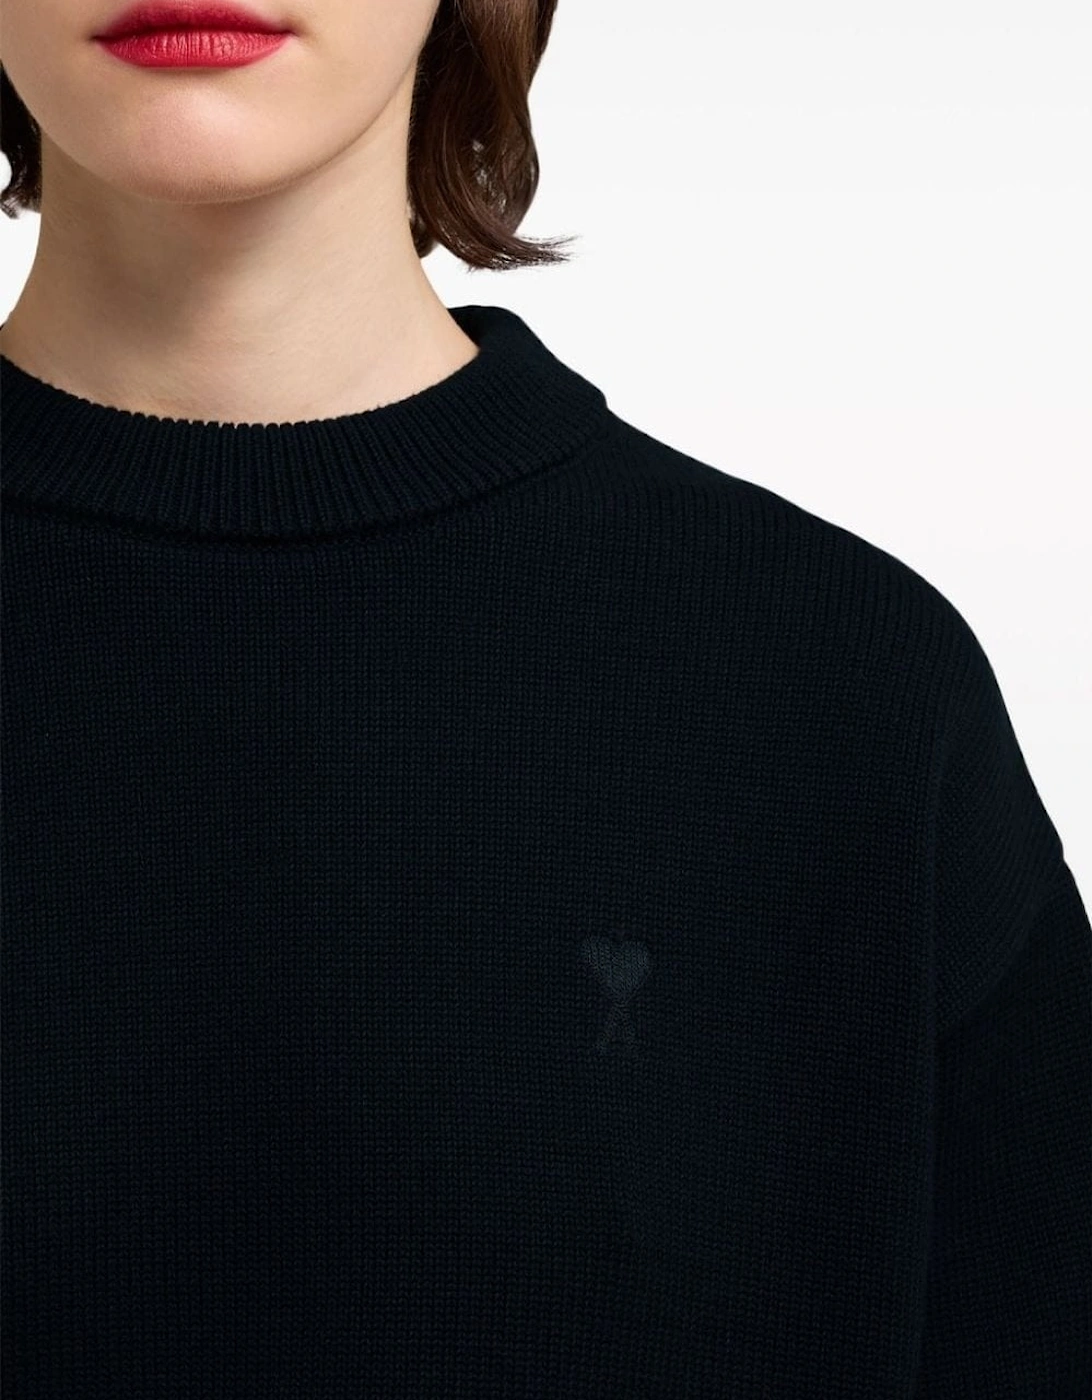 ADC Crewneck Sweater Black